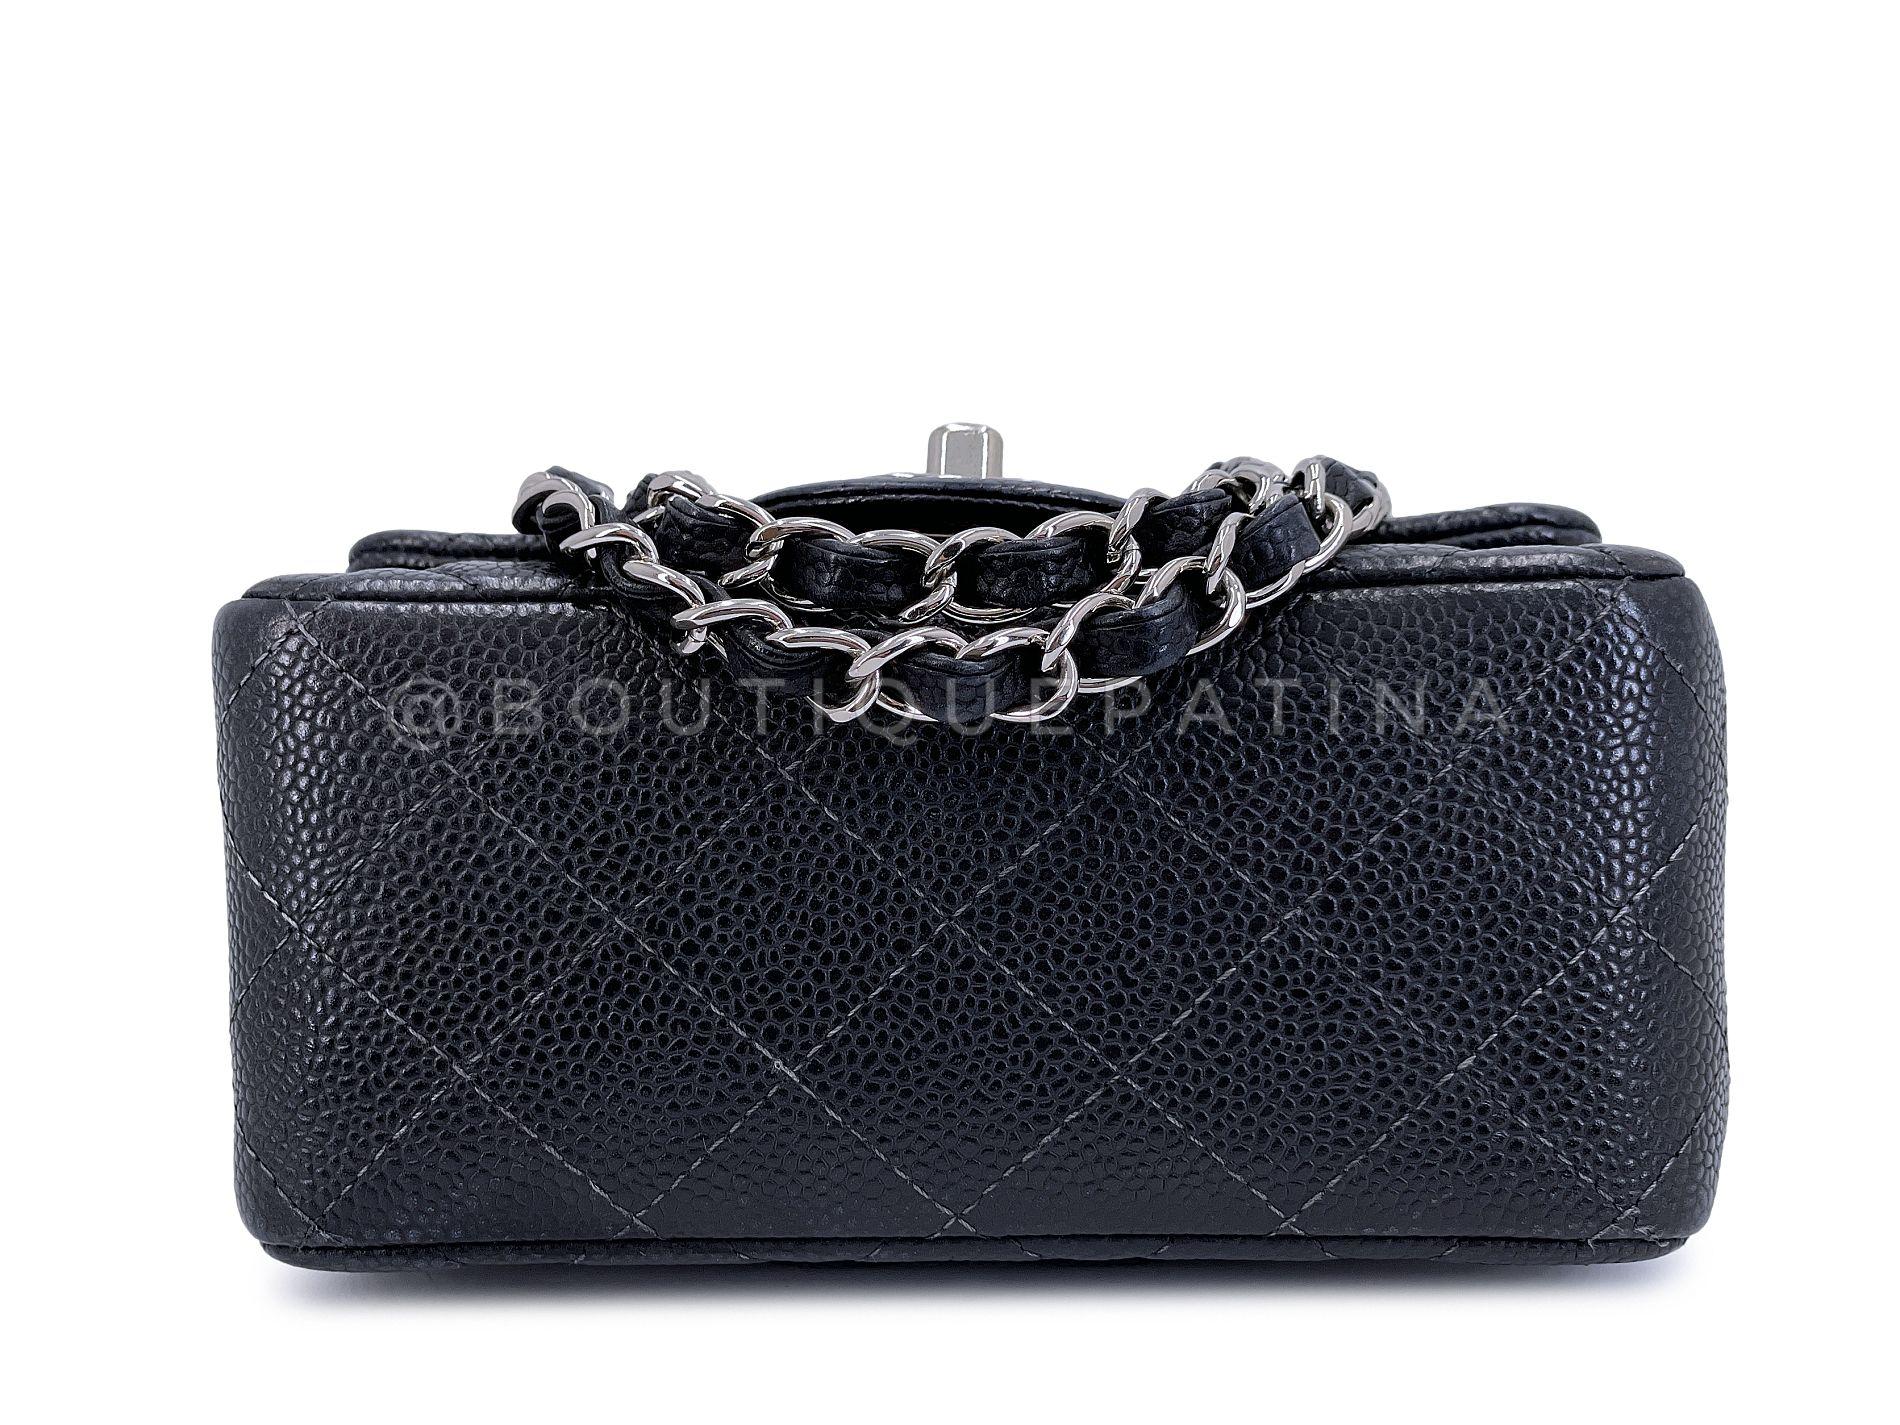 Chanel Black Caviar Square Mini Classic Flap Bag SHW 68093 For Sale 2